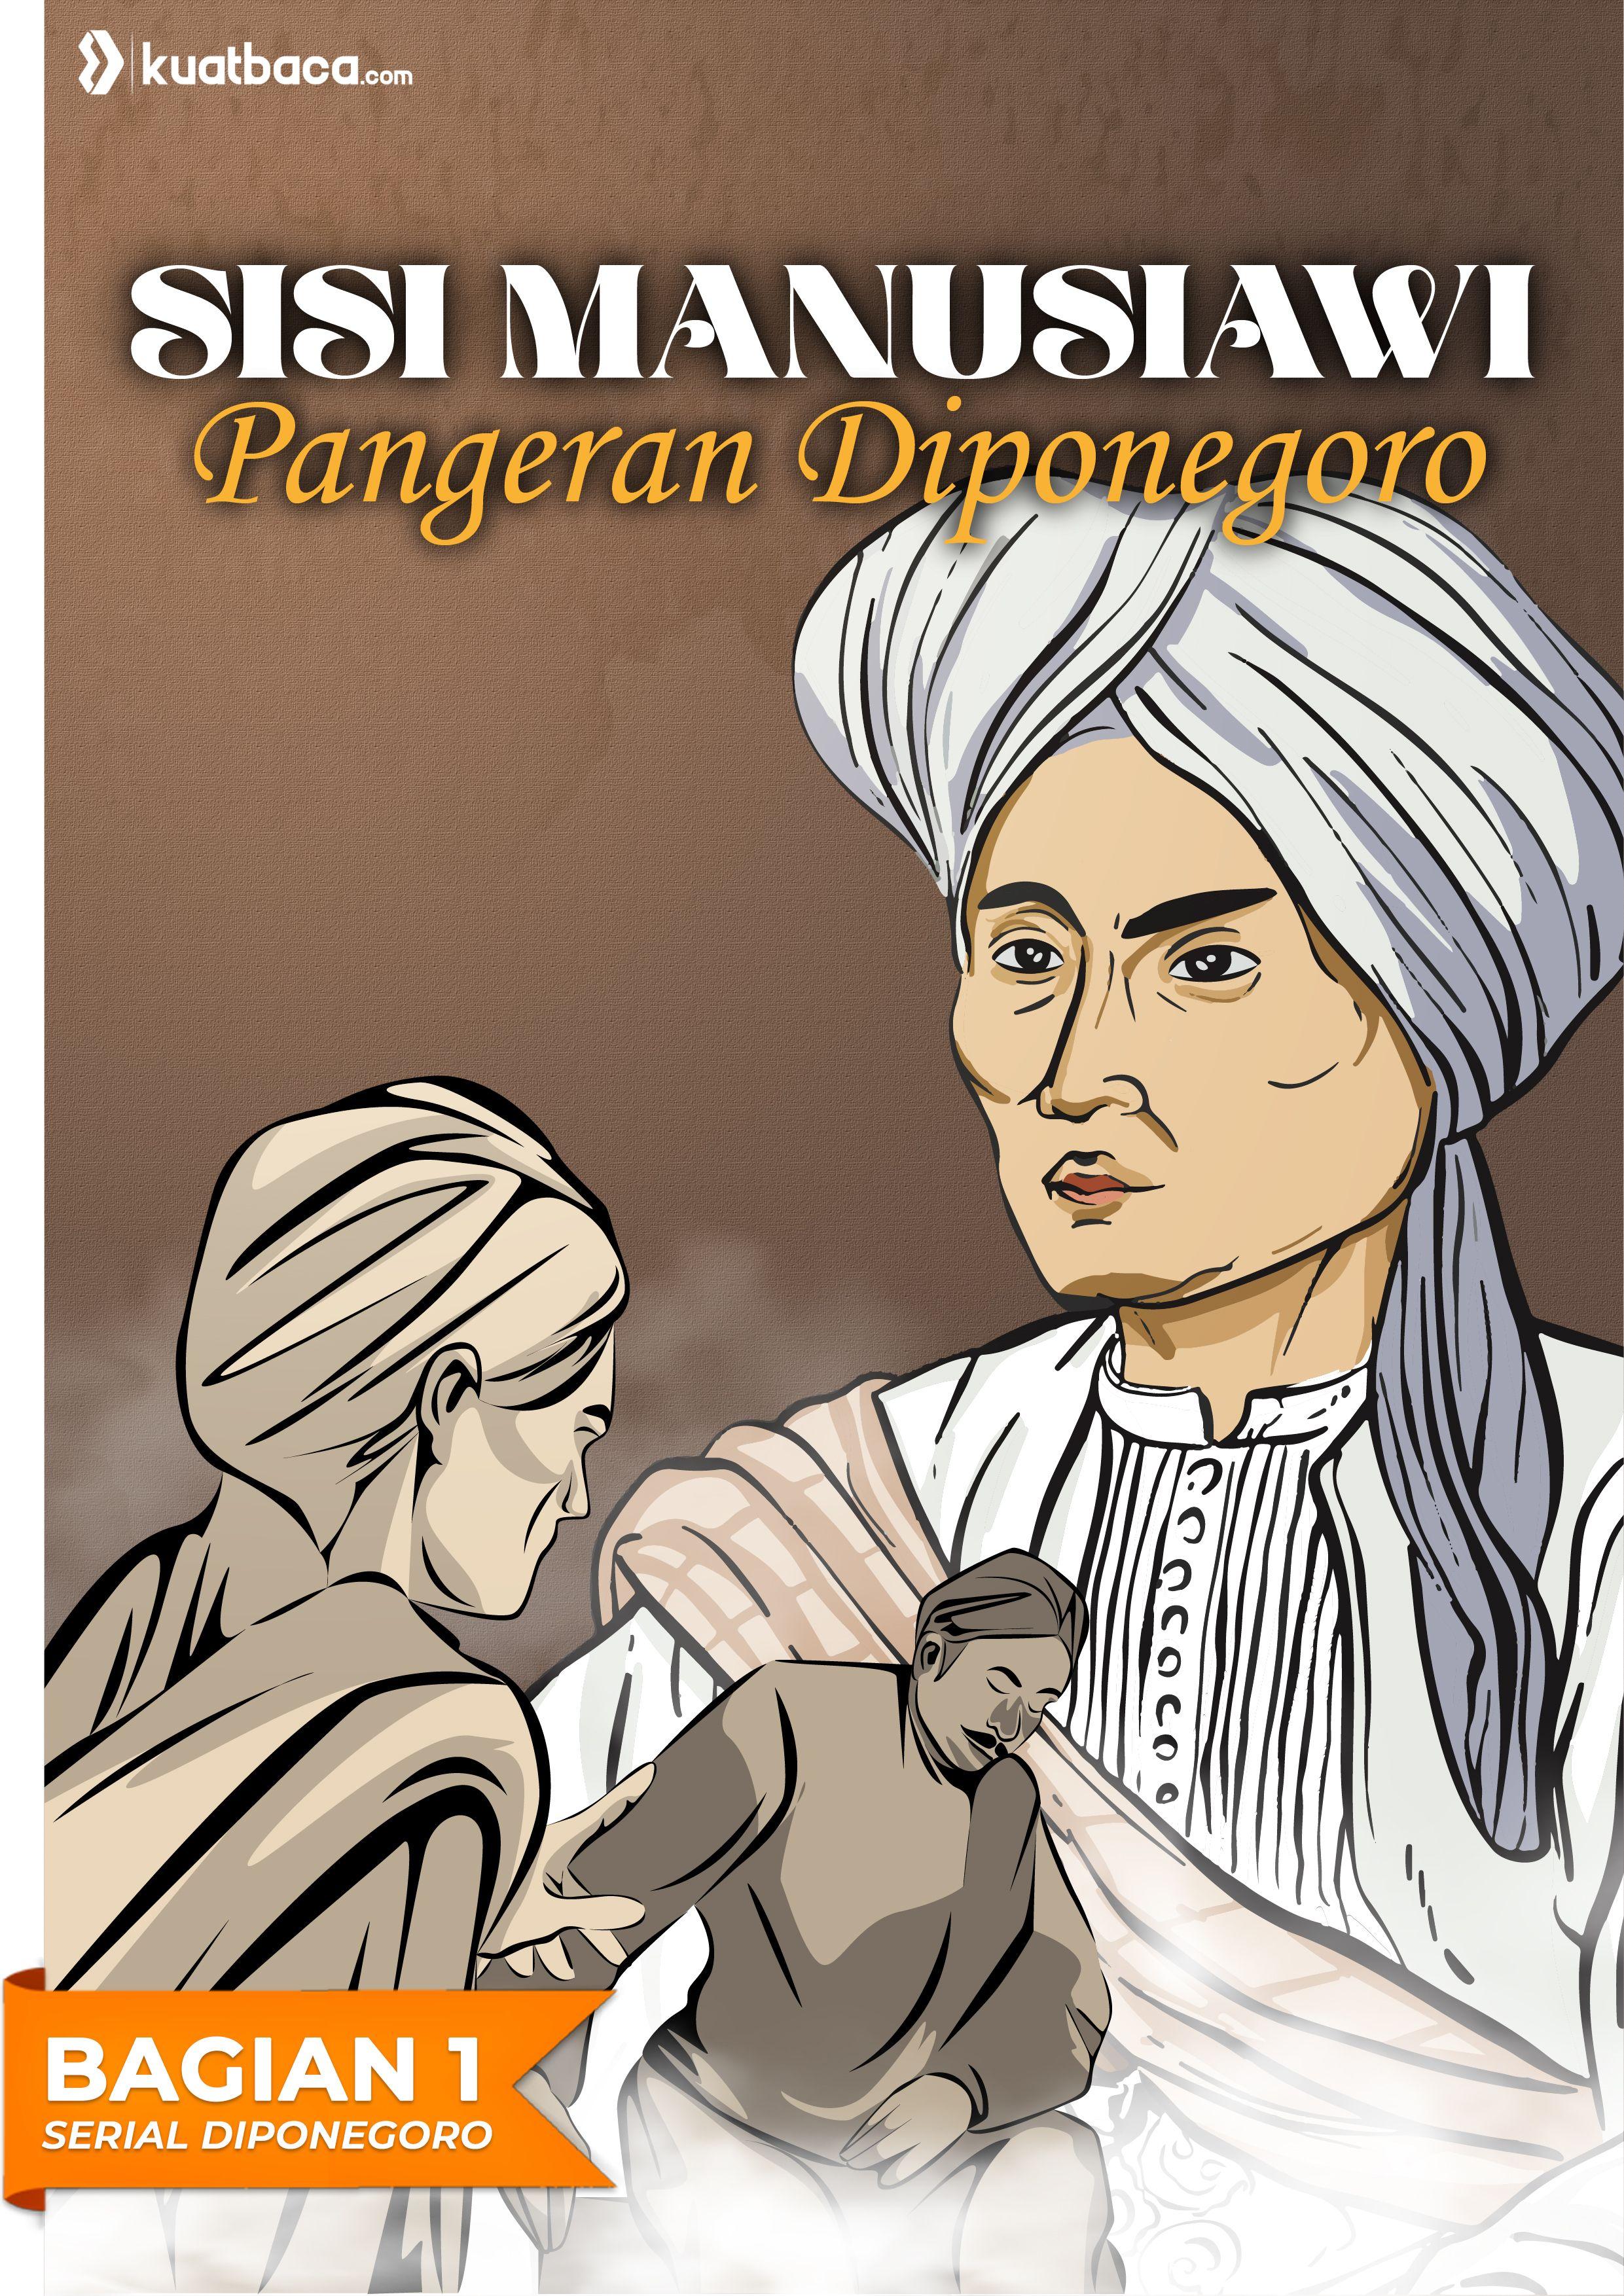 Sisi Manusiawi Pangeran Diponegoro - [Bagian 1 Diponegoro]